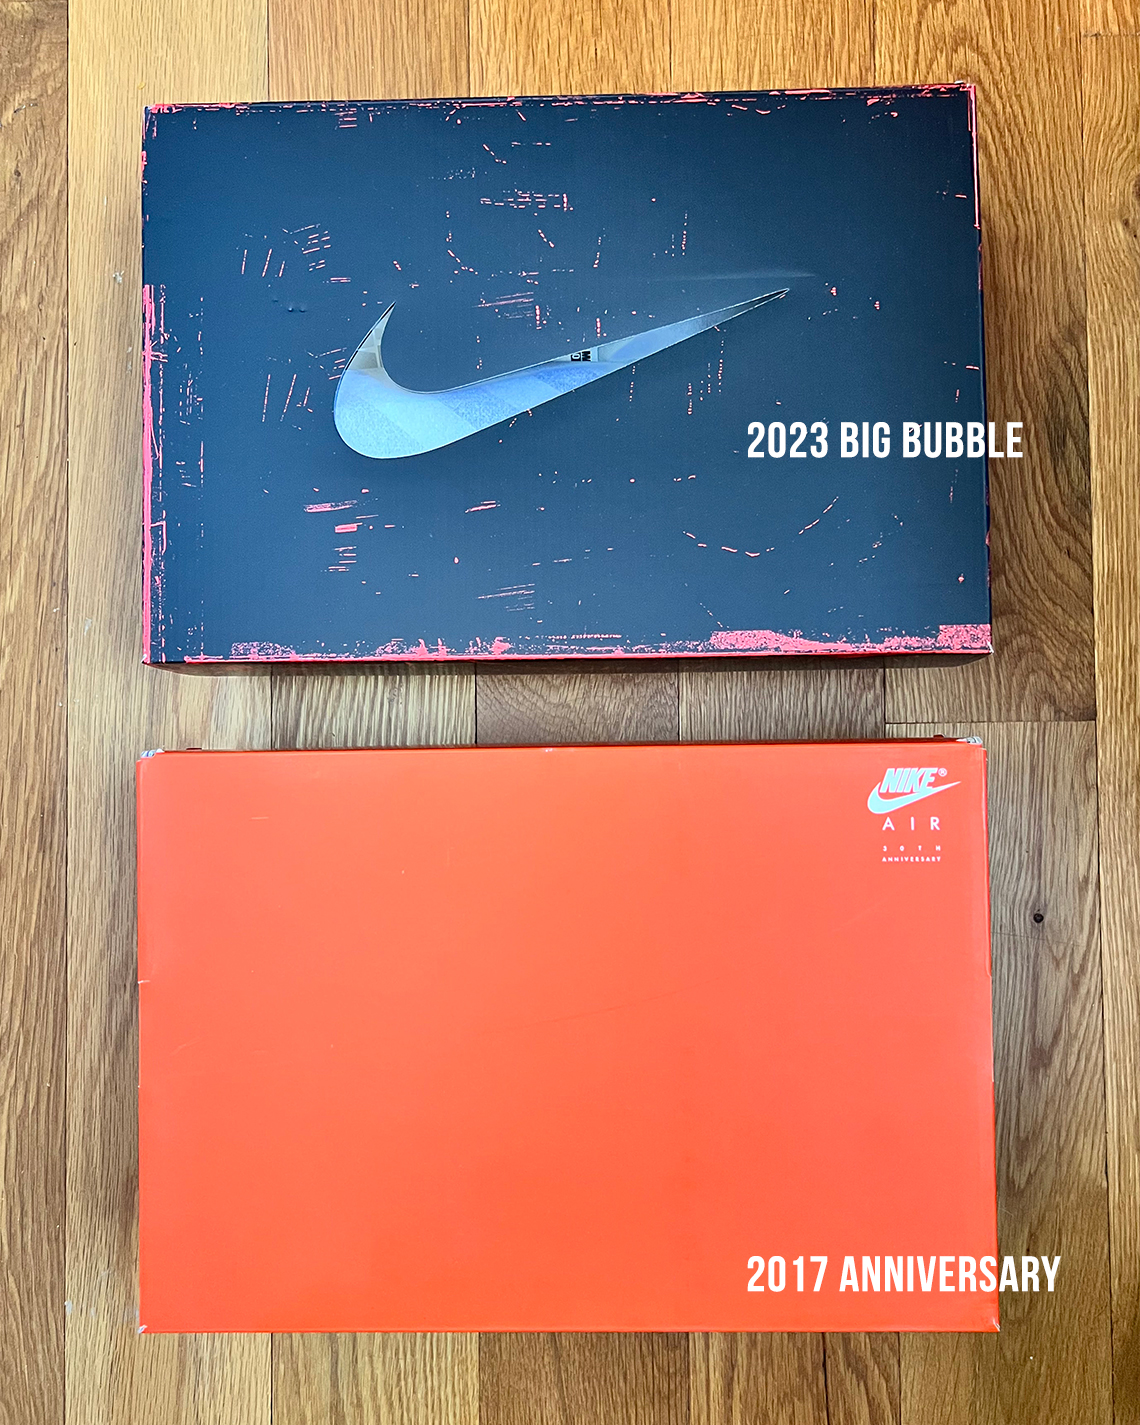 Nike Air Max 1 2017 Vs 2023 Box